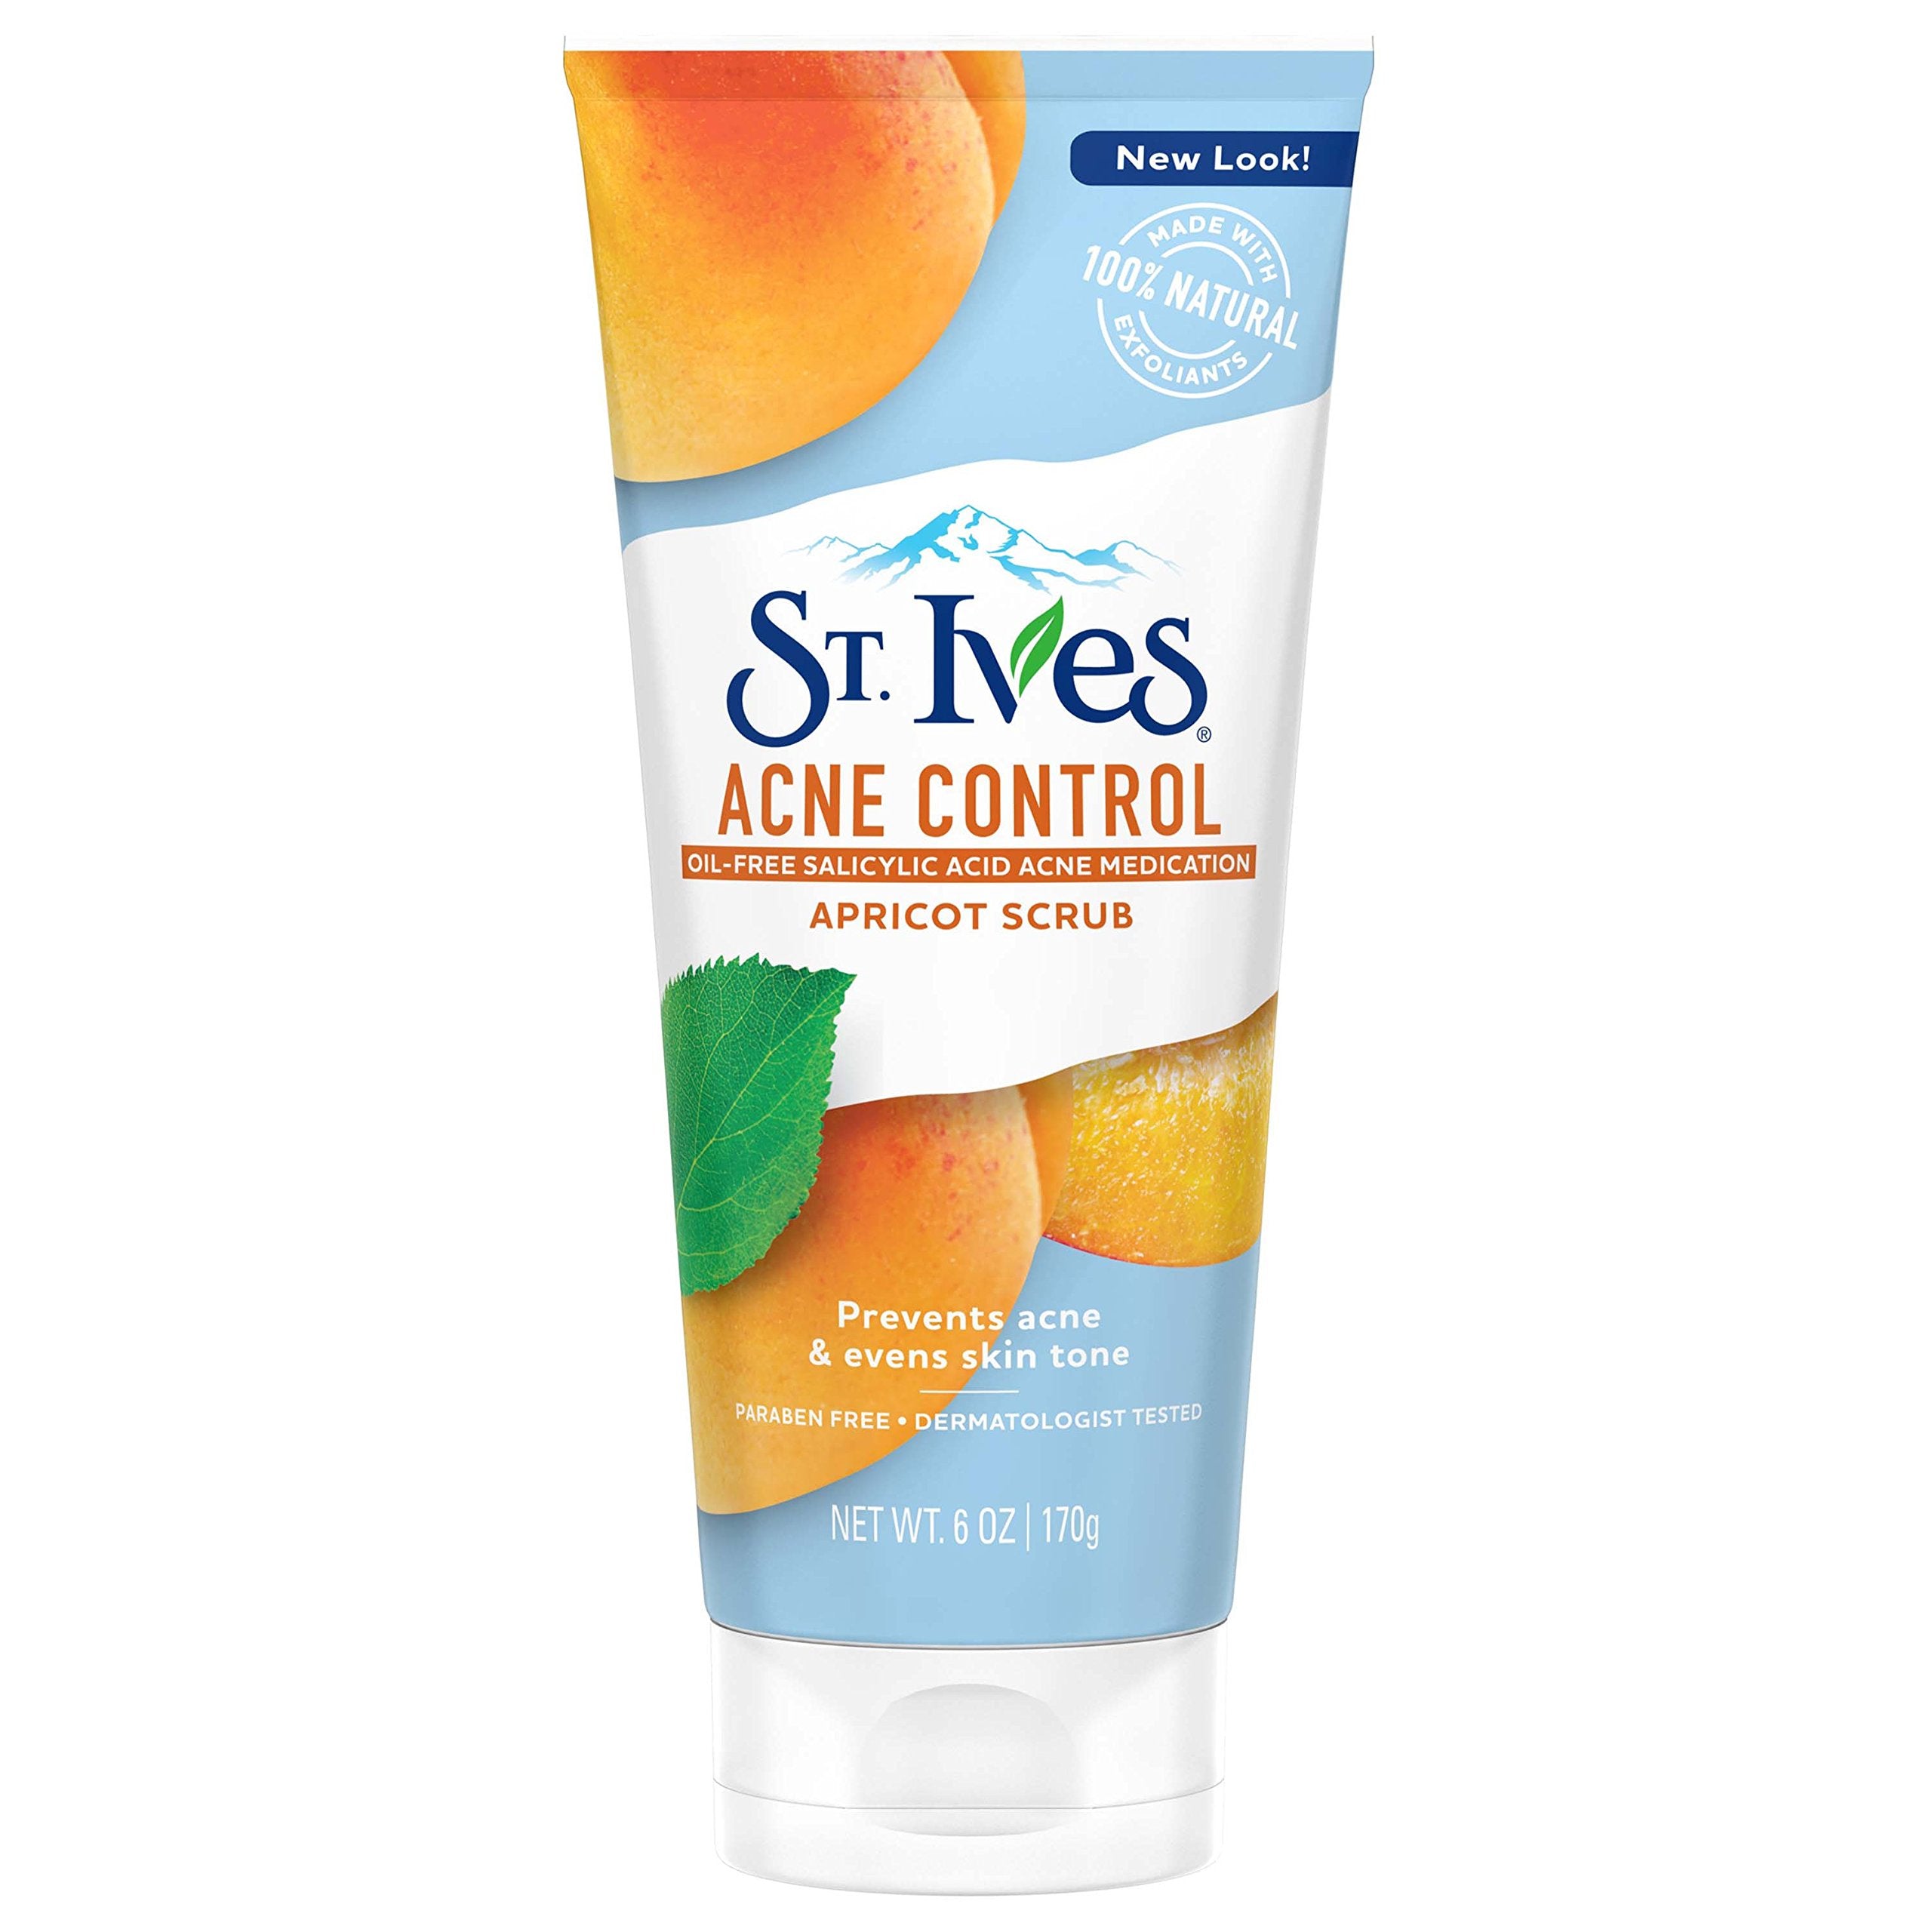 St. Ives Apricot Scrub, Blemish Control 6 oz